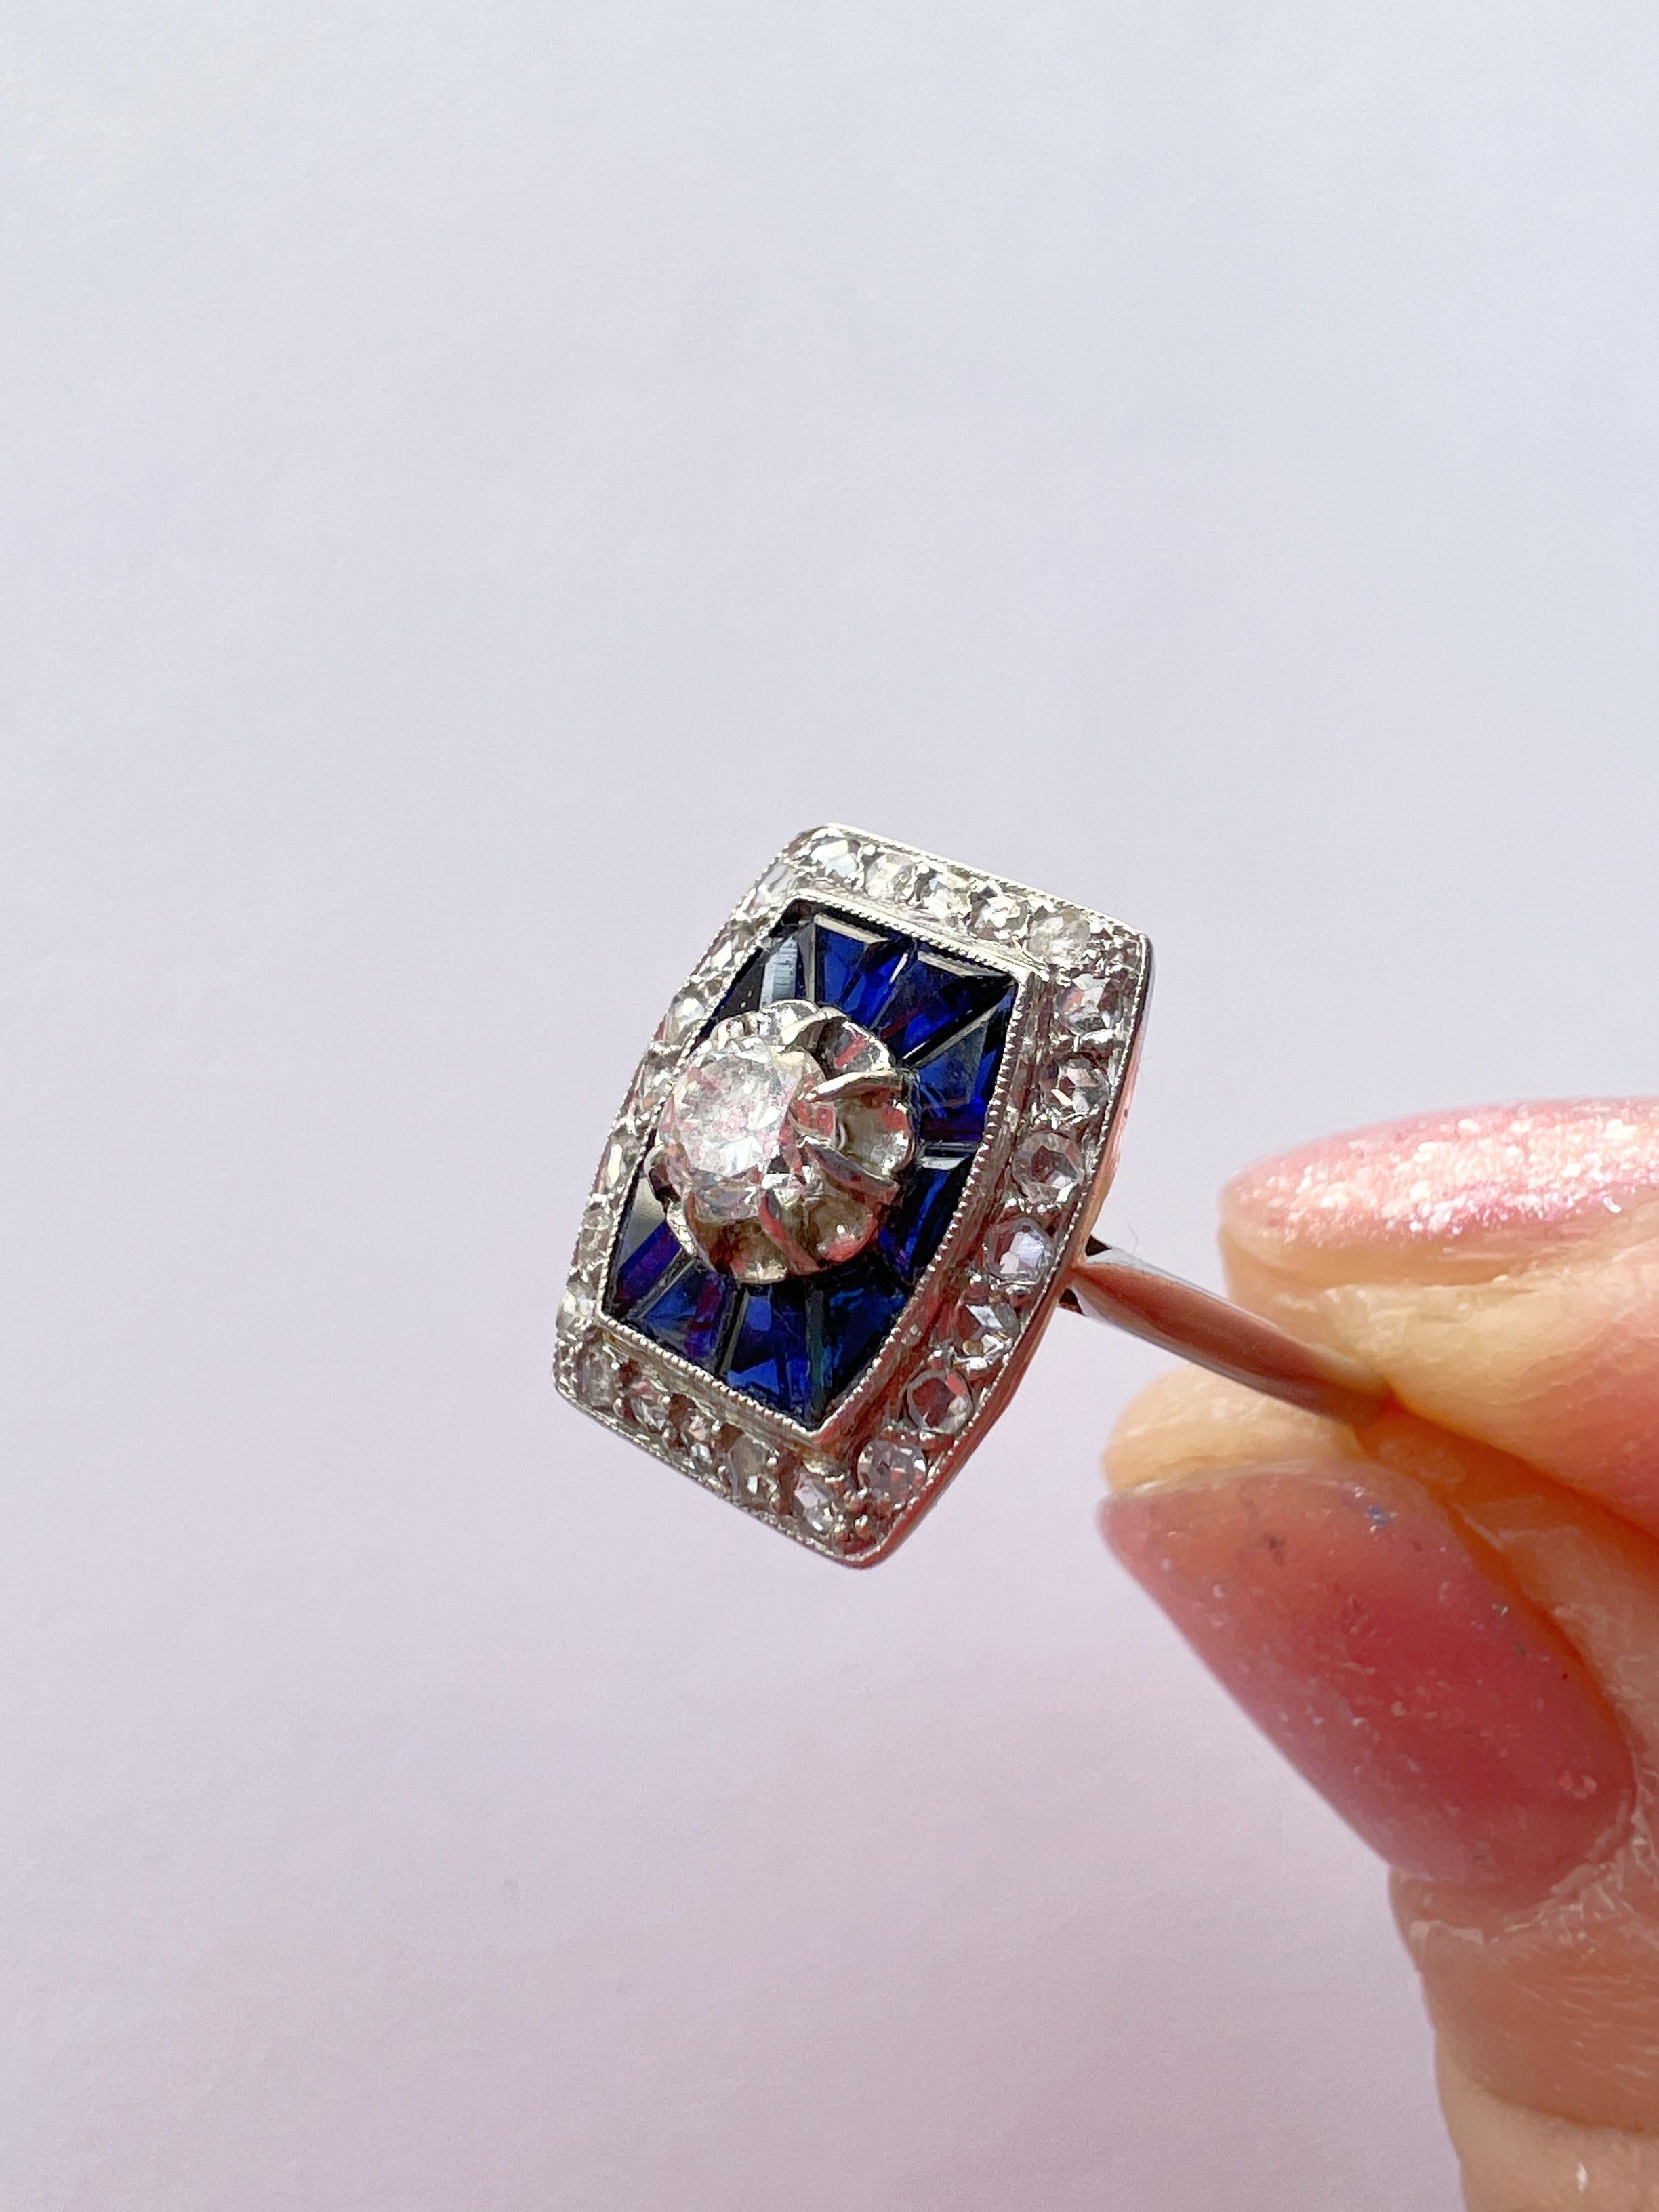 French Art Deco Era 18k White Gold Diamond Blue Sapphire Ring For Sale 1